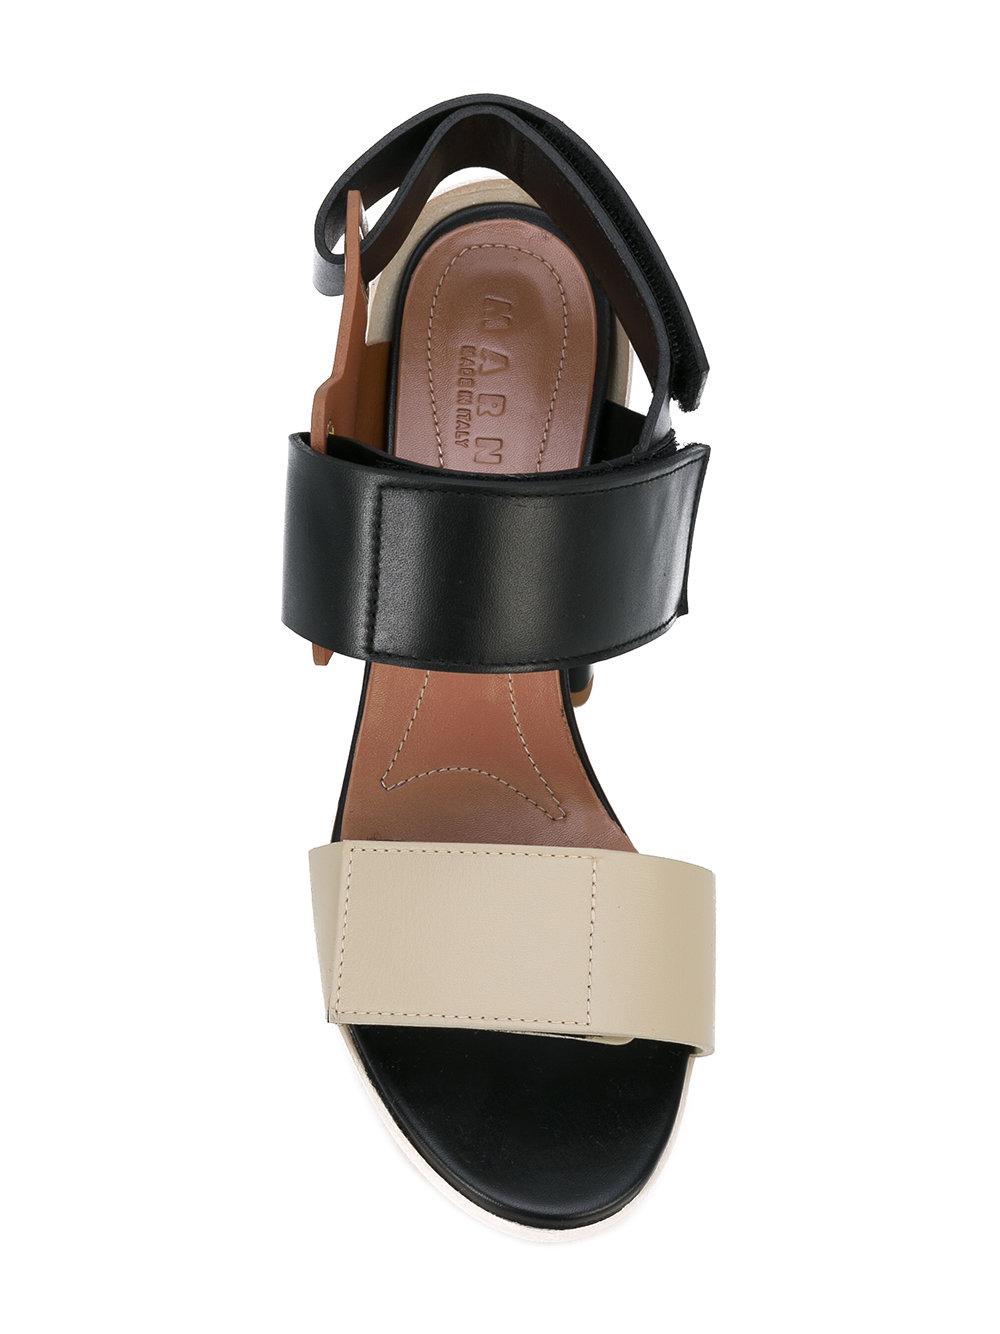 Marni Leather Opanka Sandals in Black - Lyst